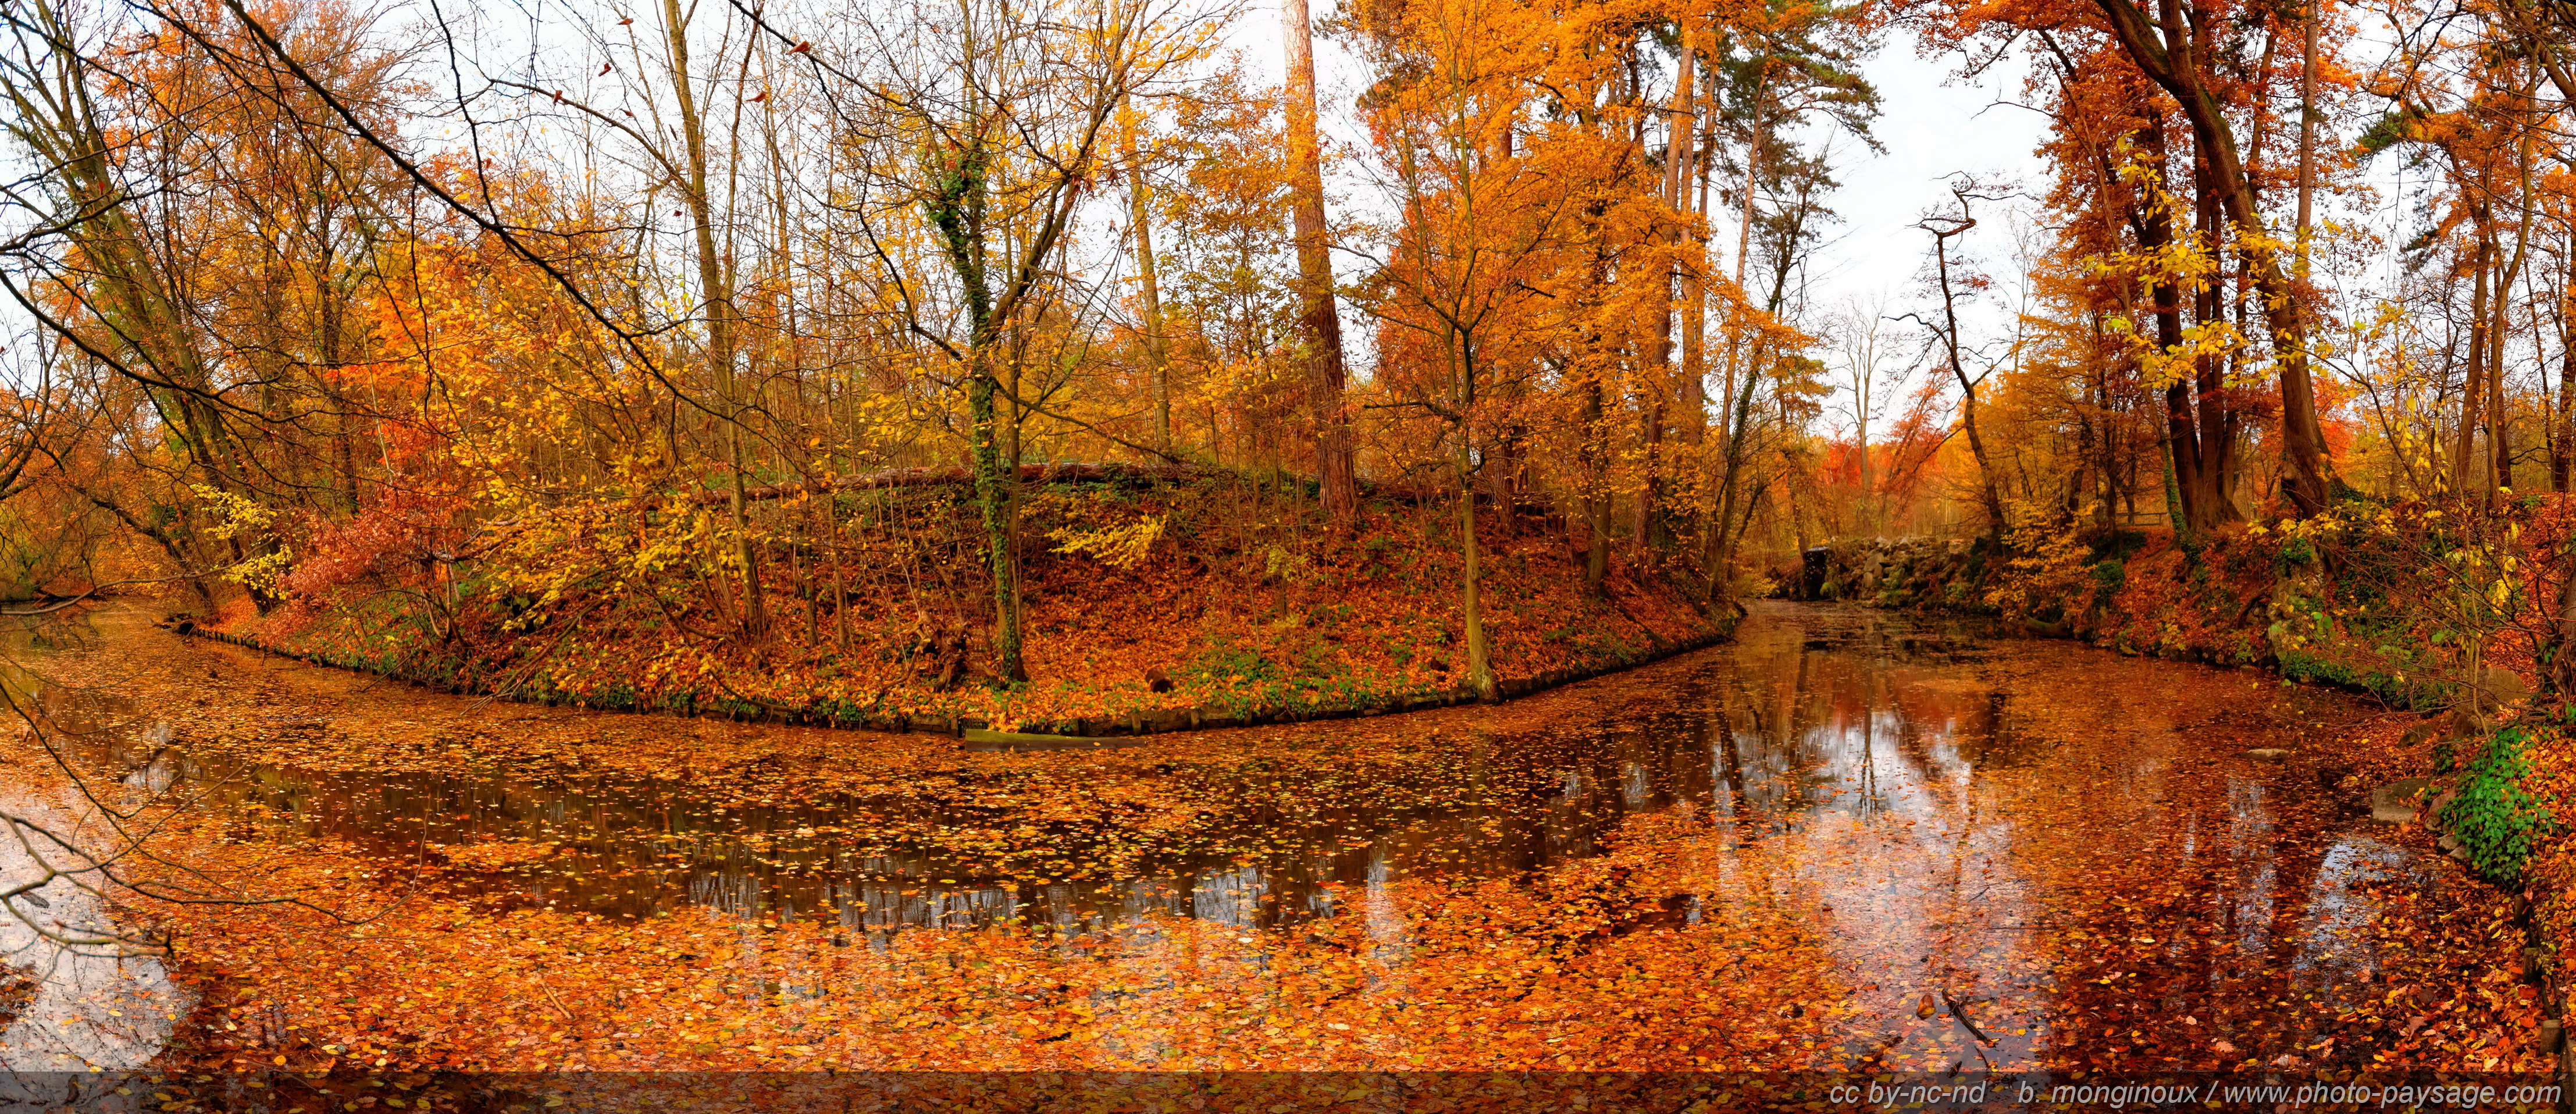 images paysage automne 